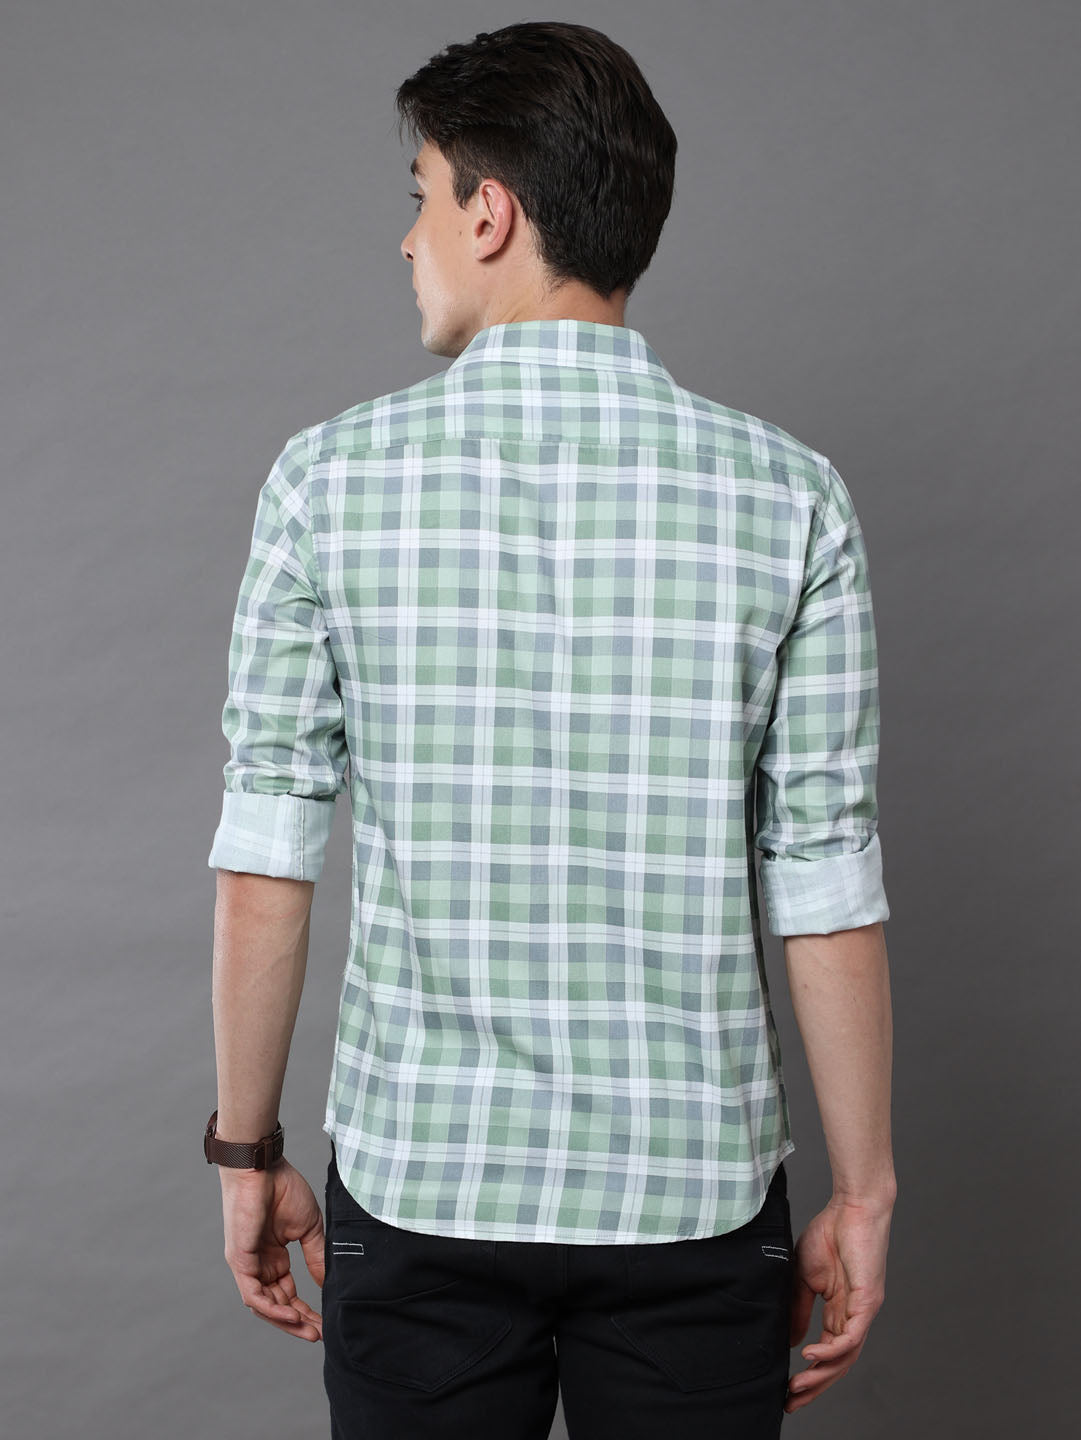 Sage Green Checks Shirt Checks Shirt Bushirt   